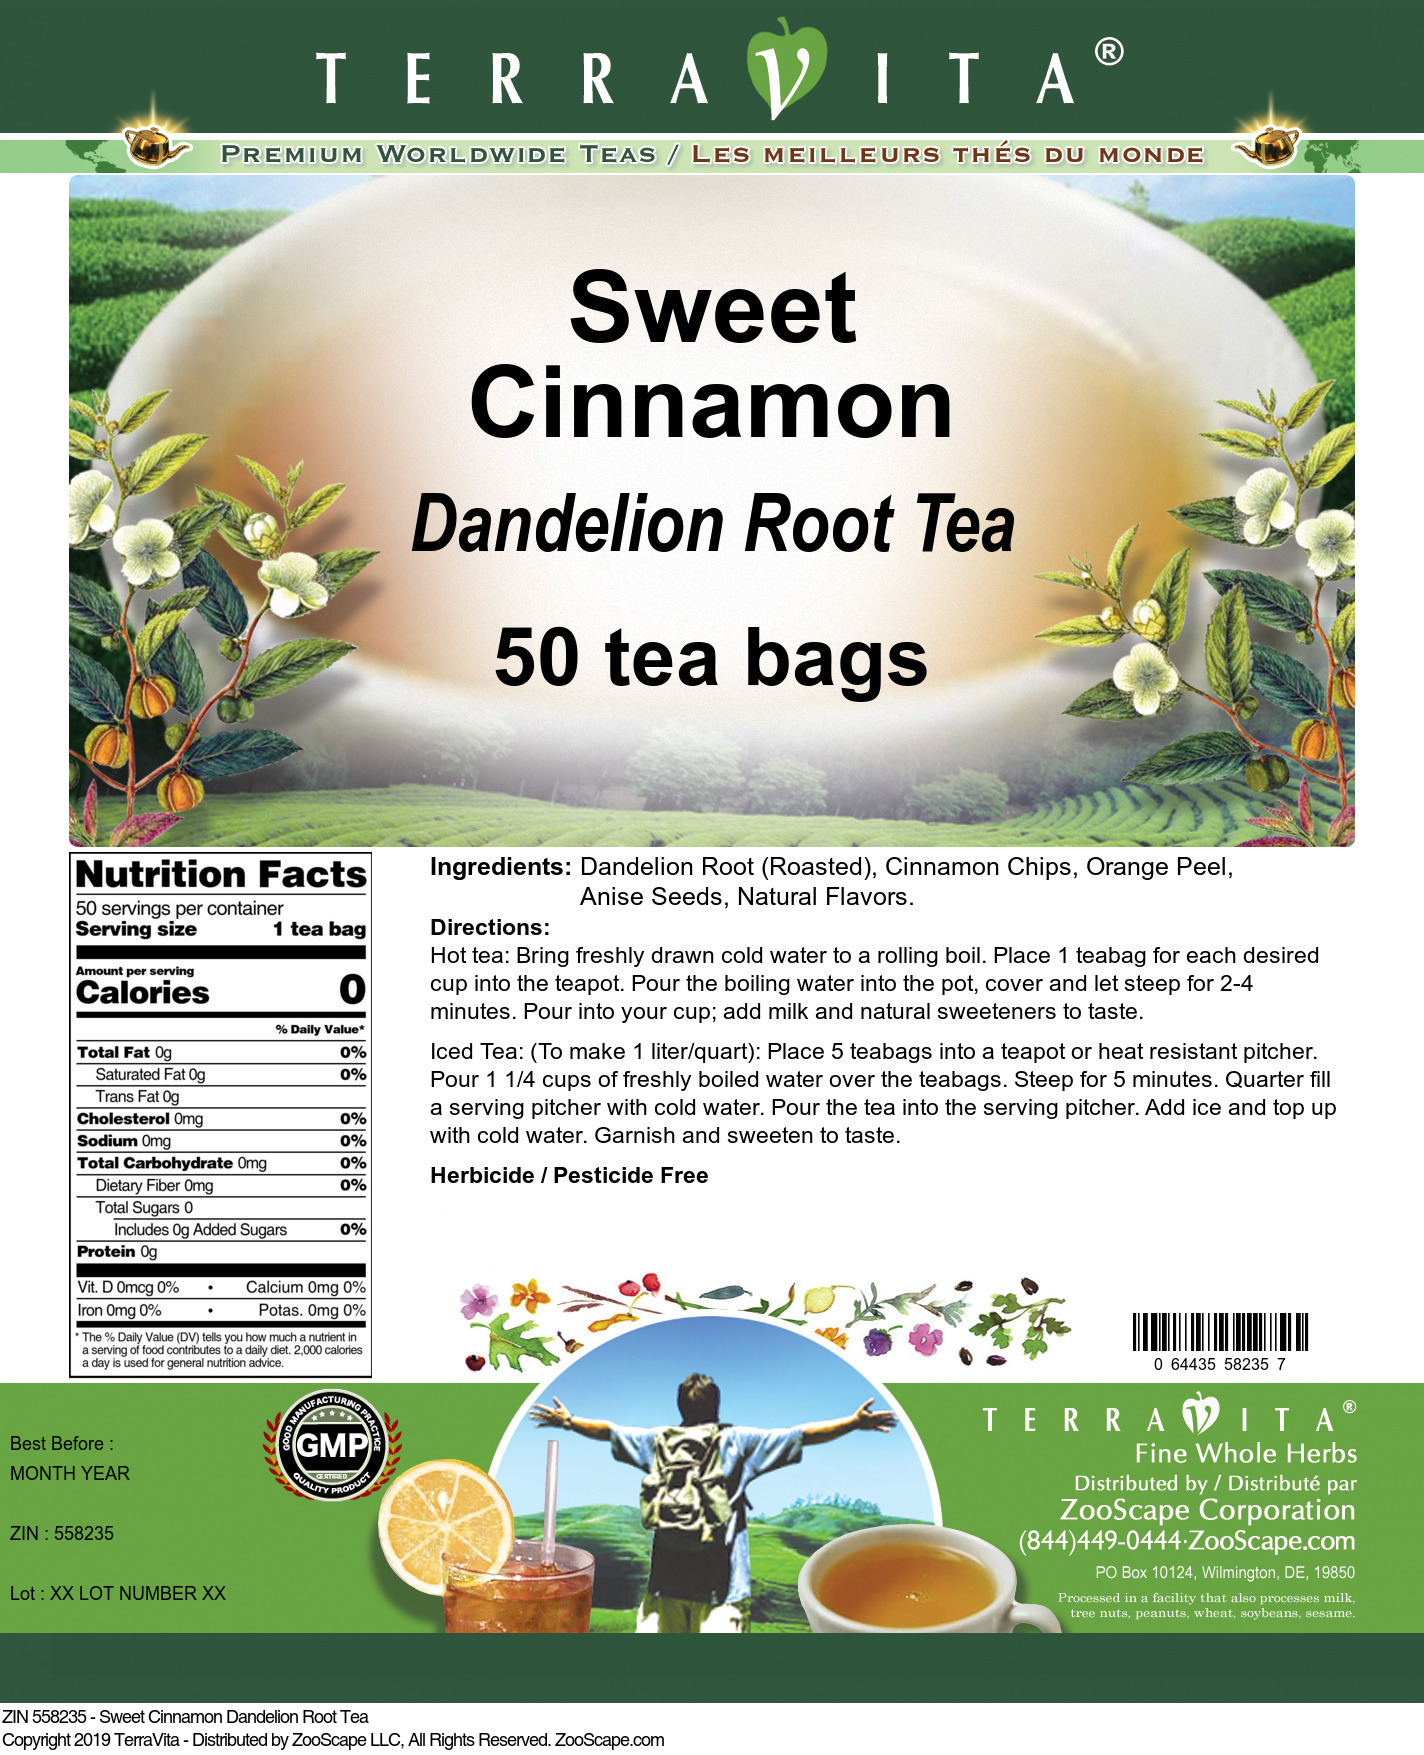 Sweet Cinnamon Dandelion Root Tea - Label